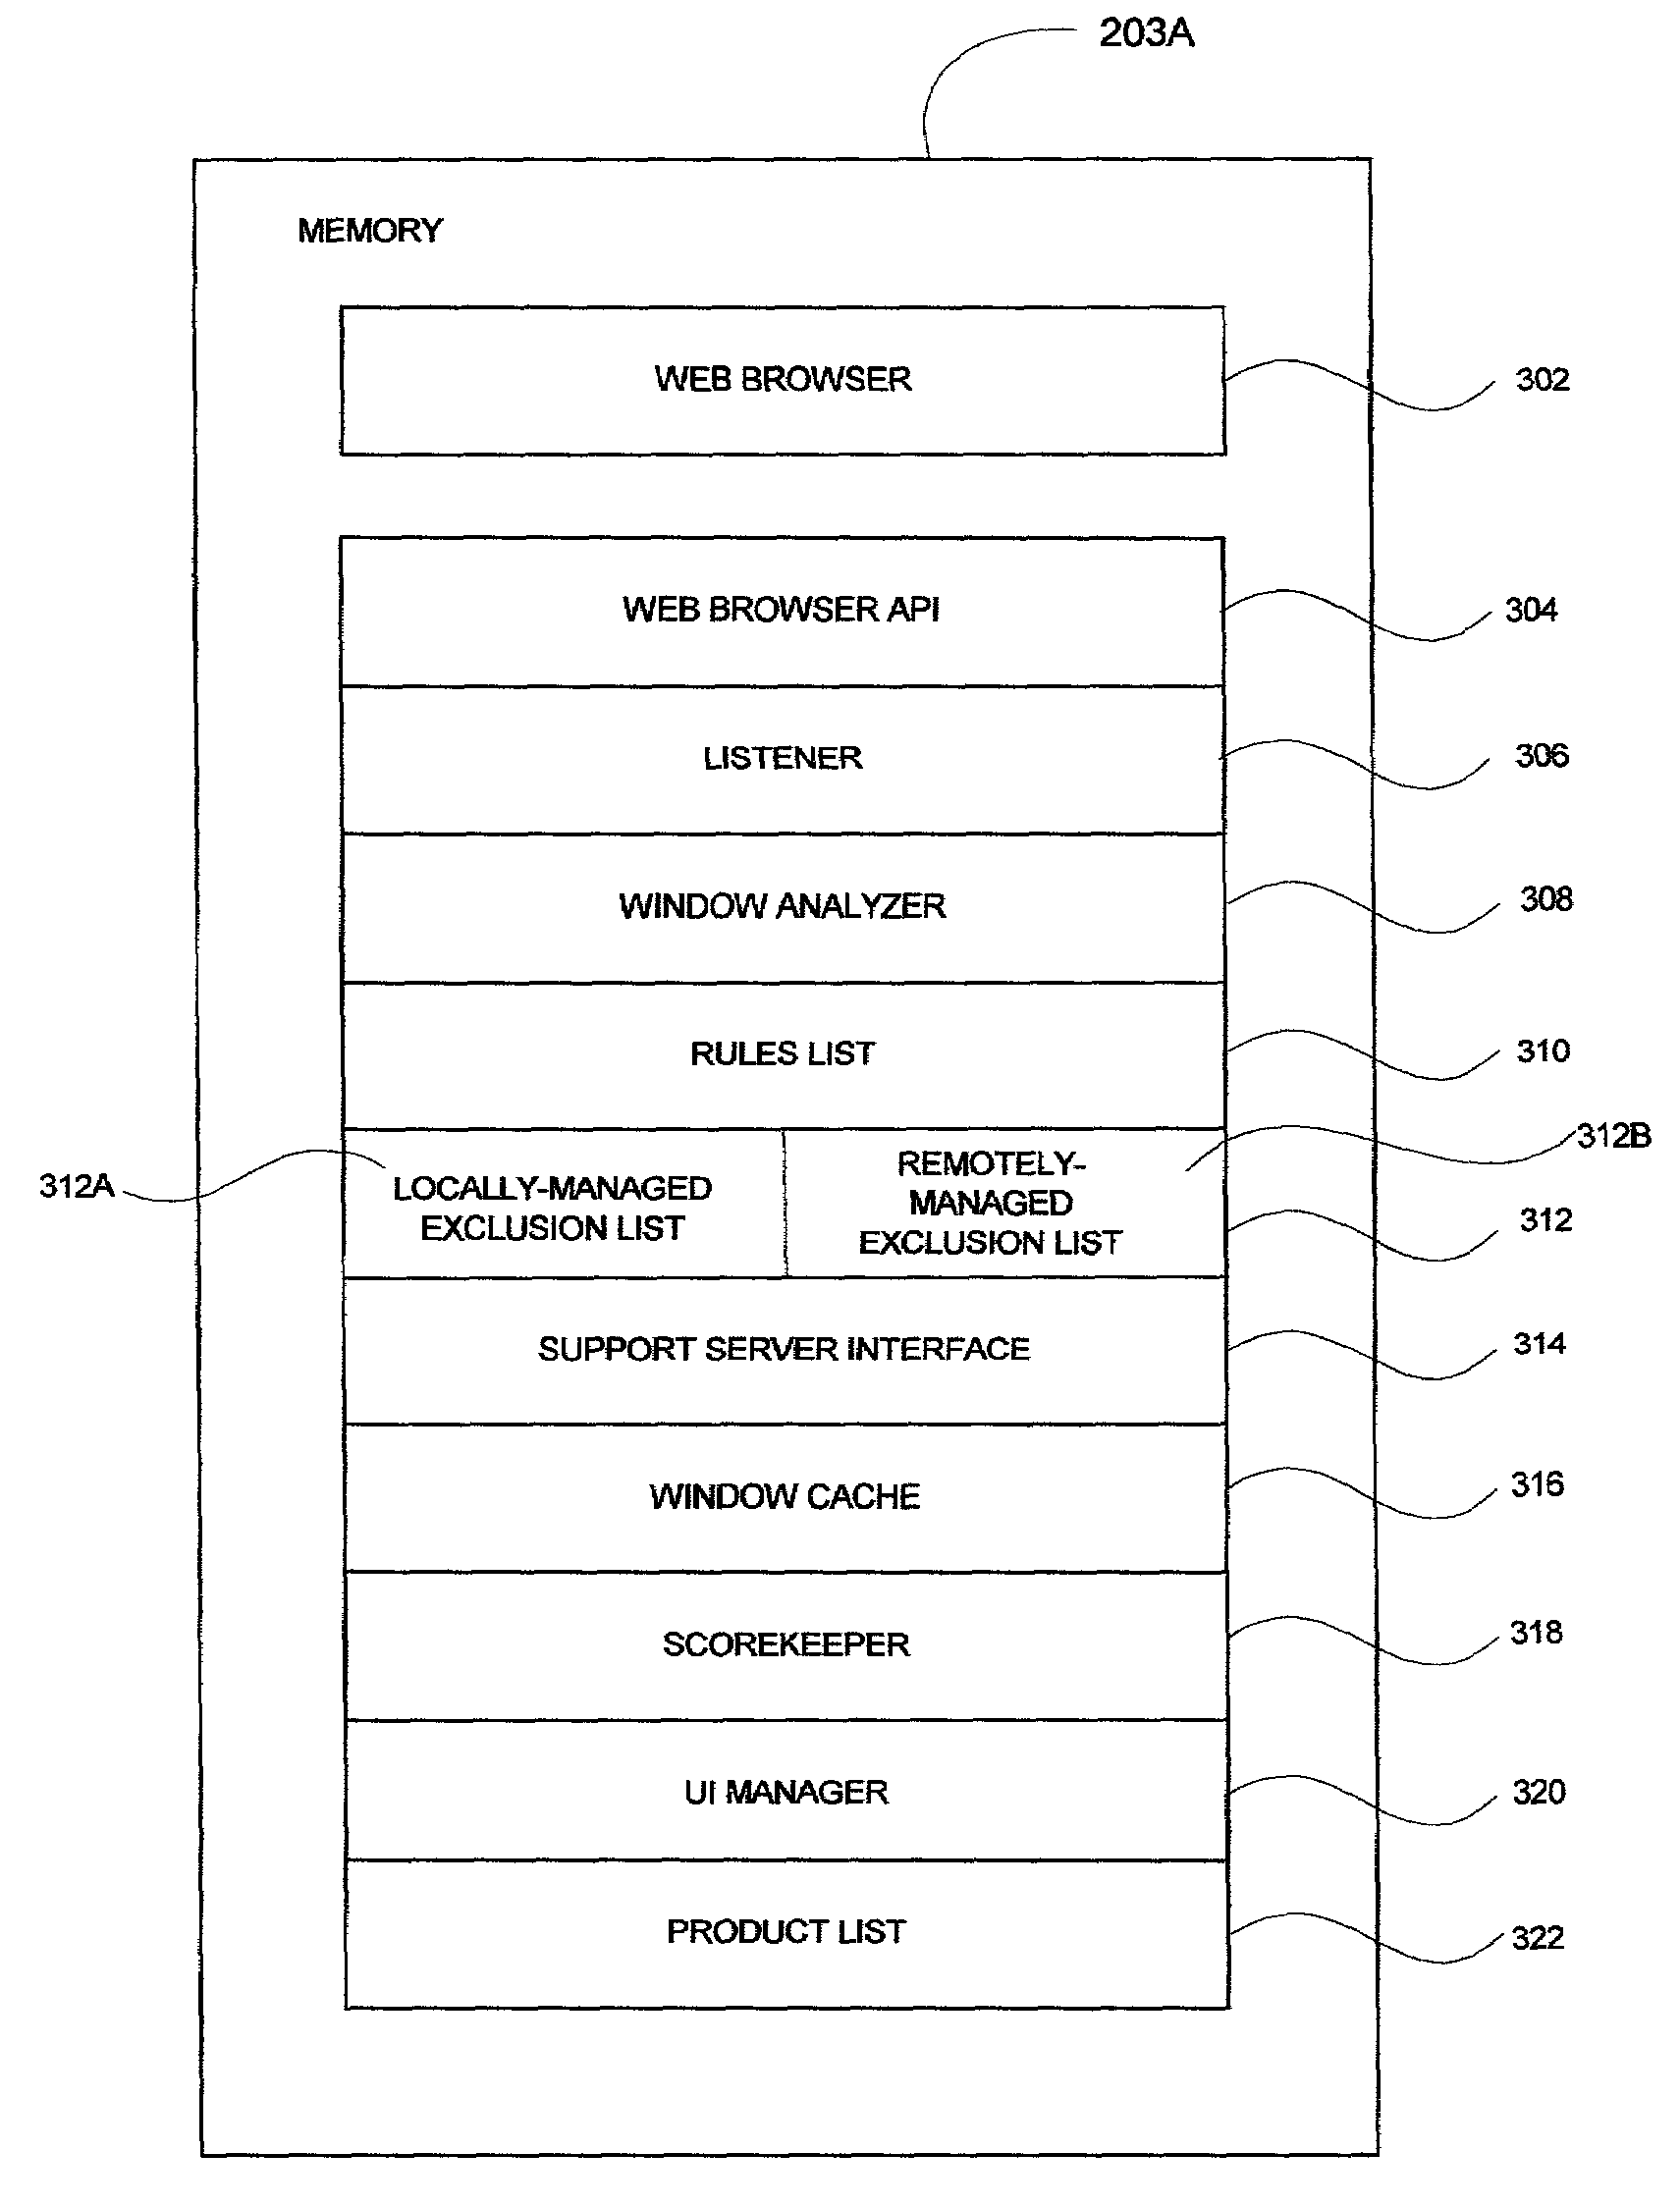 Method and apparatus for providing information regarding computer programs